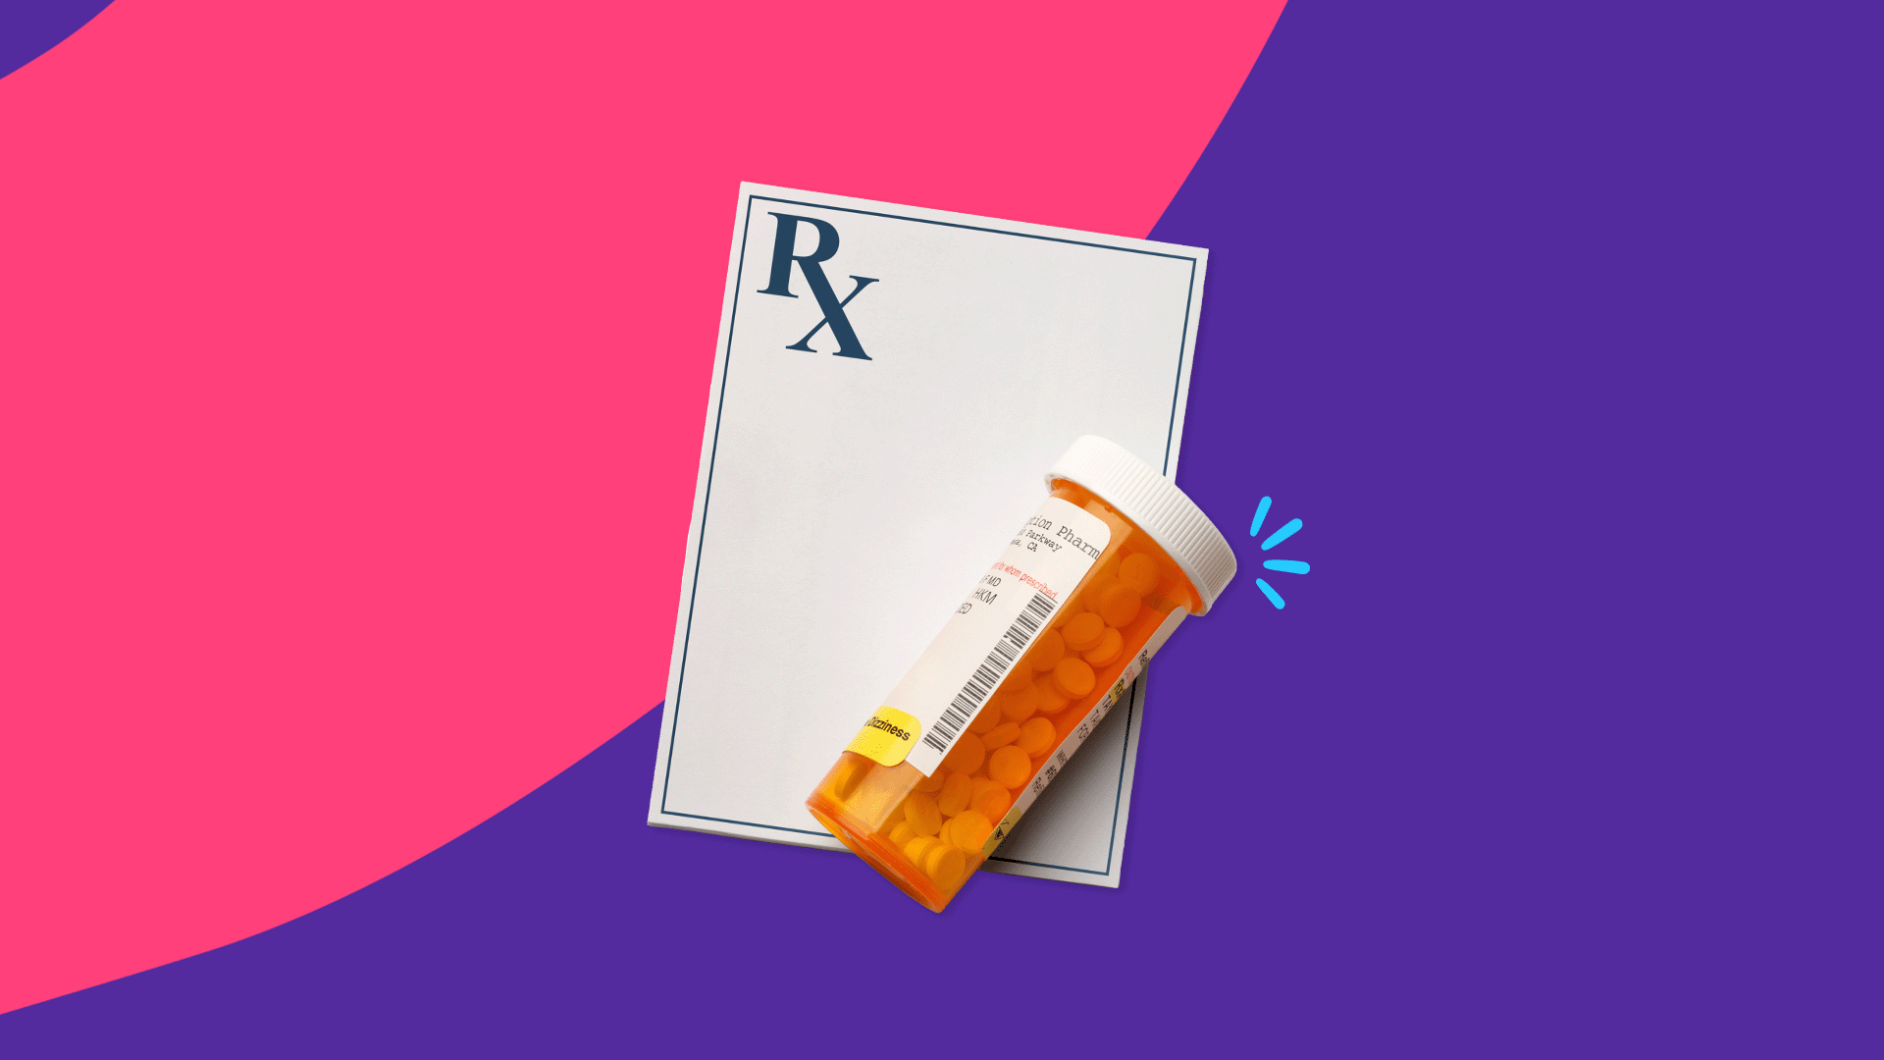 Rx prescription pad and Rx pill bottle: Gabapentin interactions